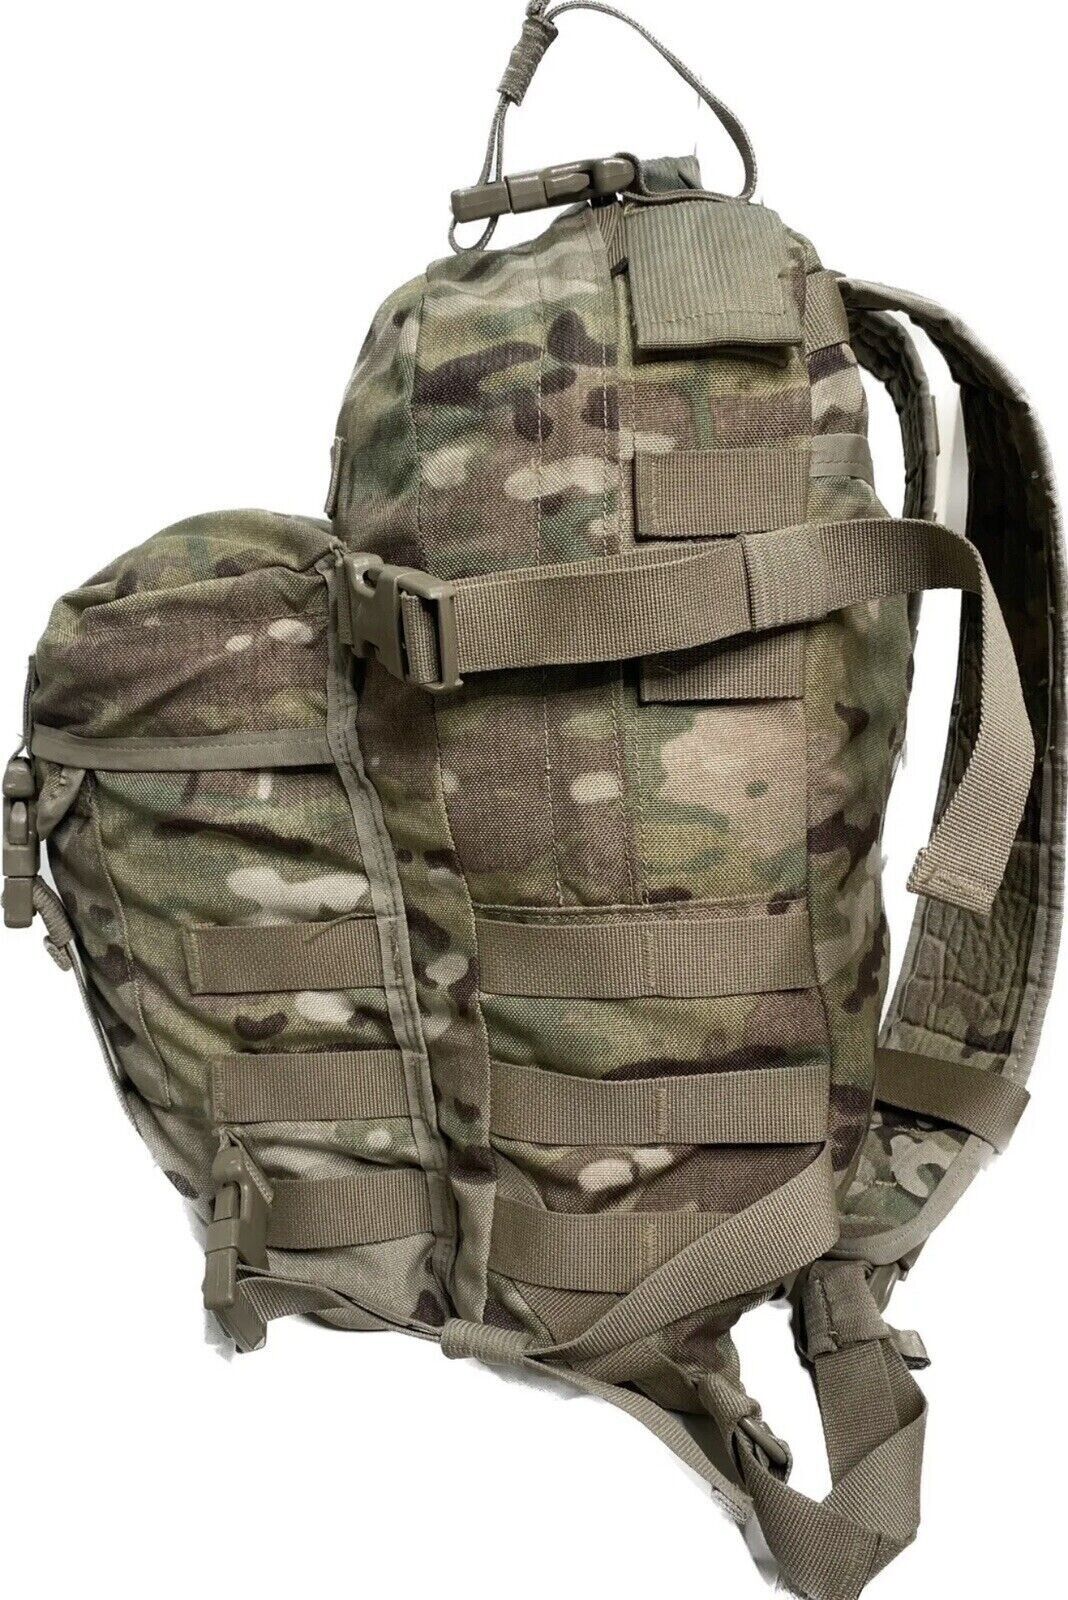 USGI Multicam OCP MOLLE Assault Pack, 3 Day Army Assault Backpack